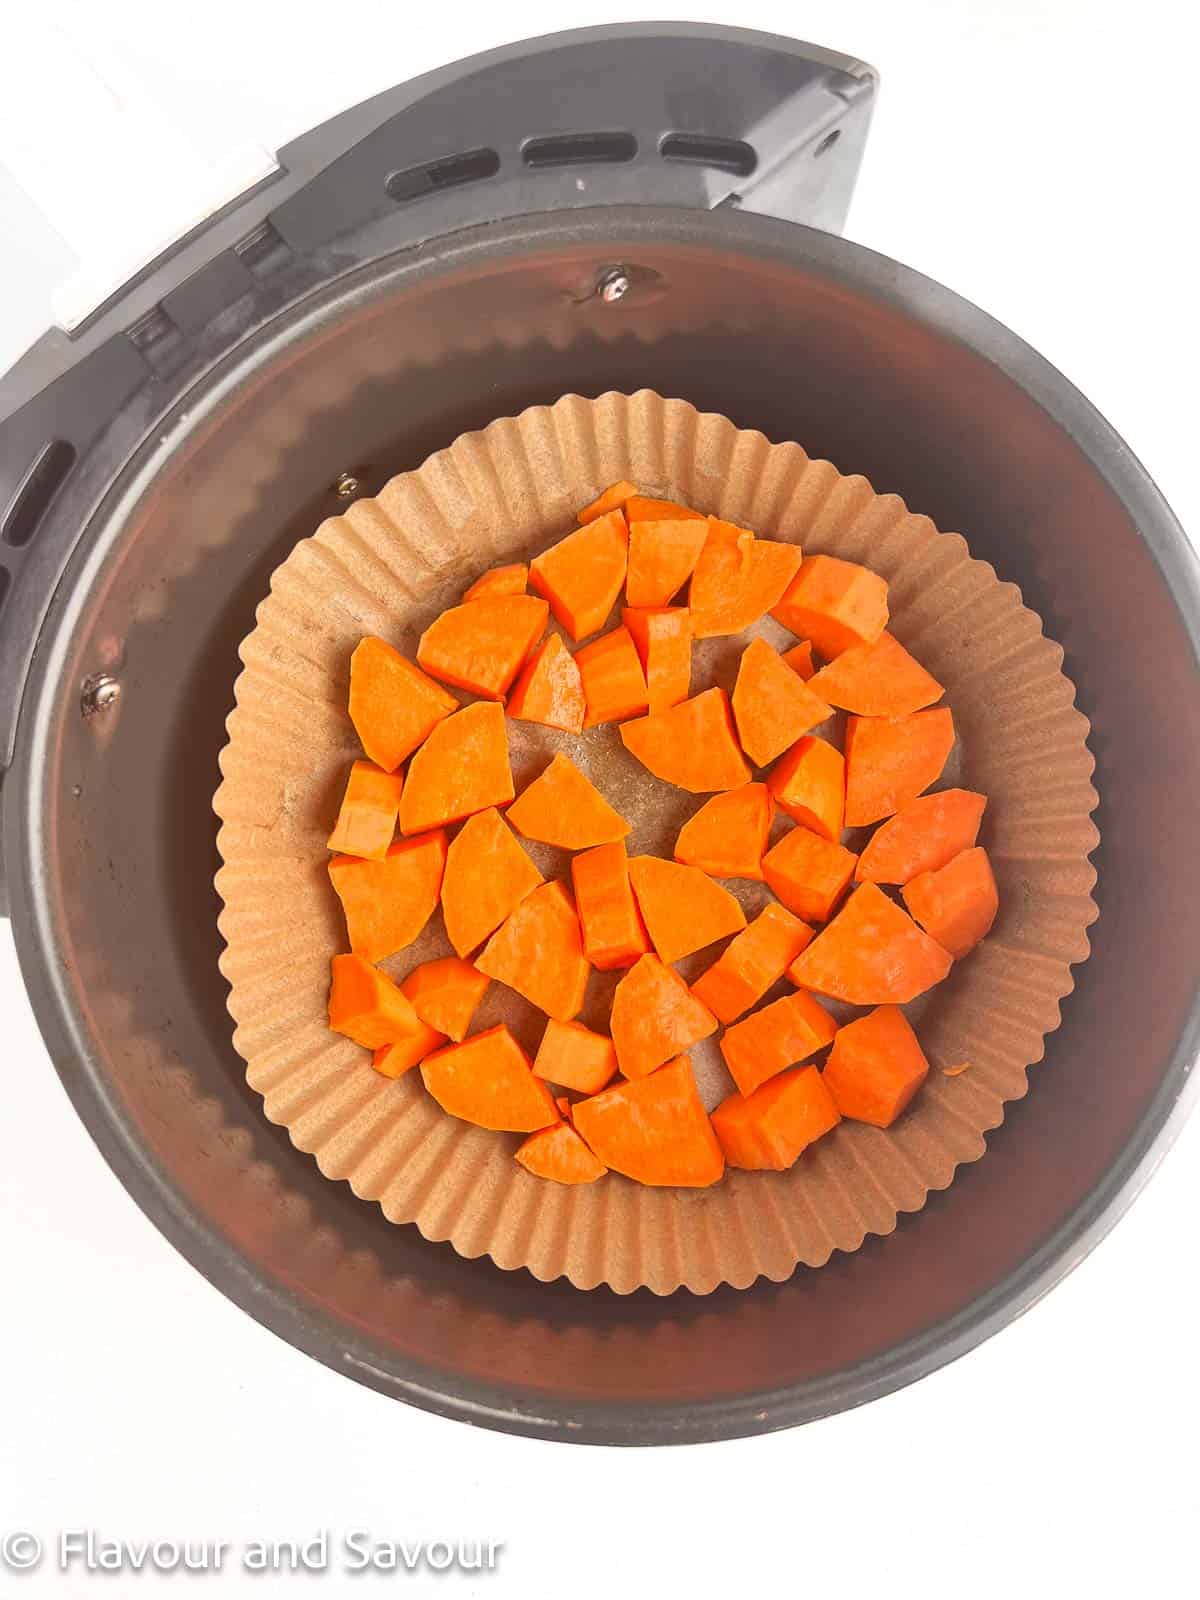 Chopped sweet potatoes in an air fryer basket.